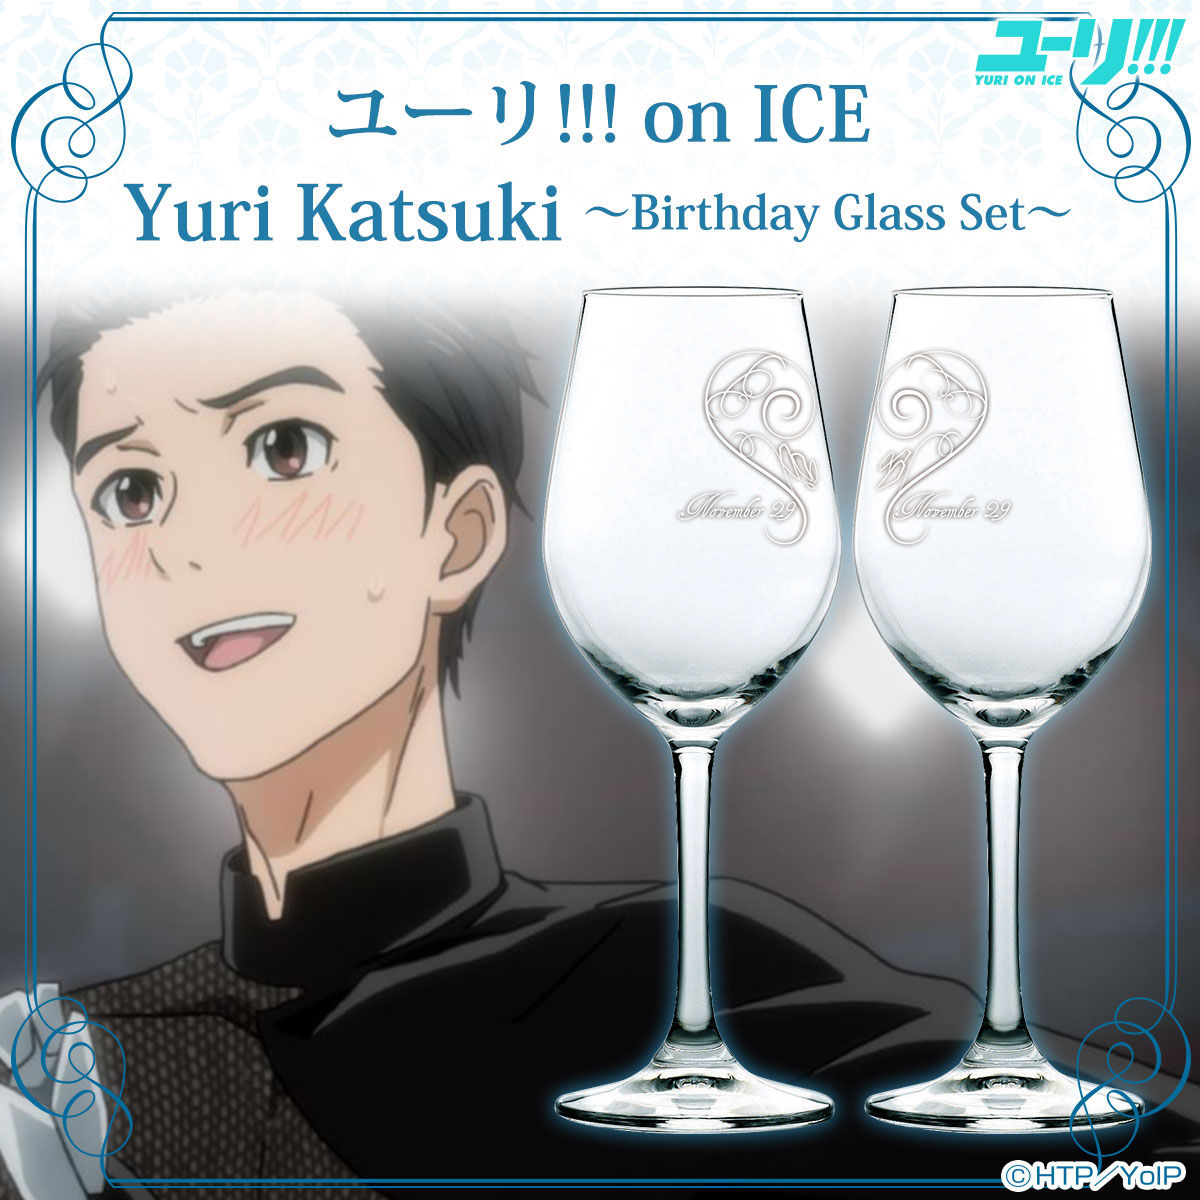 Yuri On Ice Yuri Katsuki Birthday Glass Set ユーリオンアイス 勝生勇利 バースデーグラスセット 女性に人気 キャラクター 趣味 コレクション プレミアムバンダイ公式通販